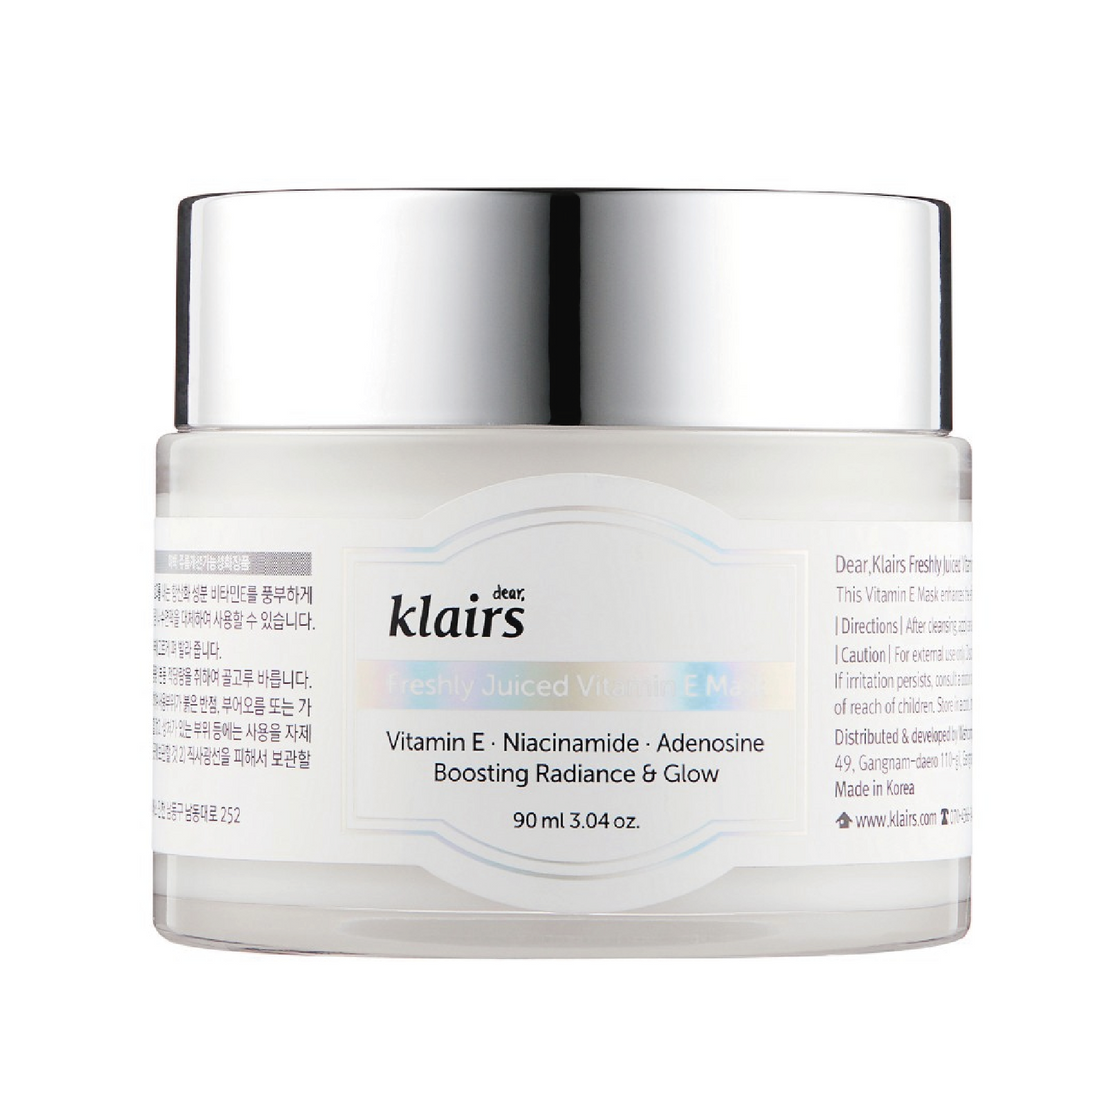 Klairs | Freshly Juiced Vitamin E Mask